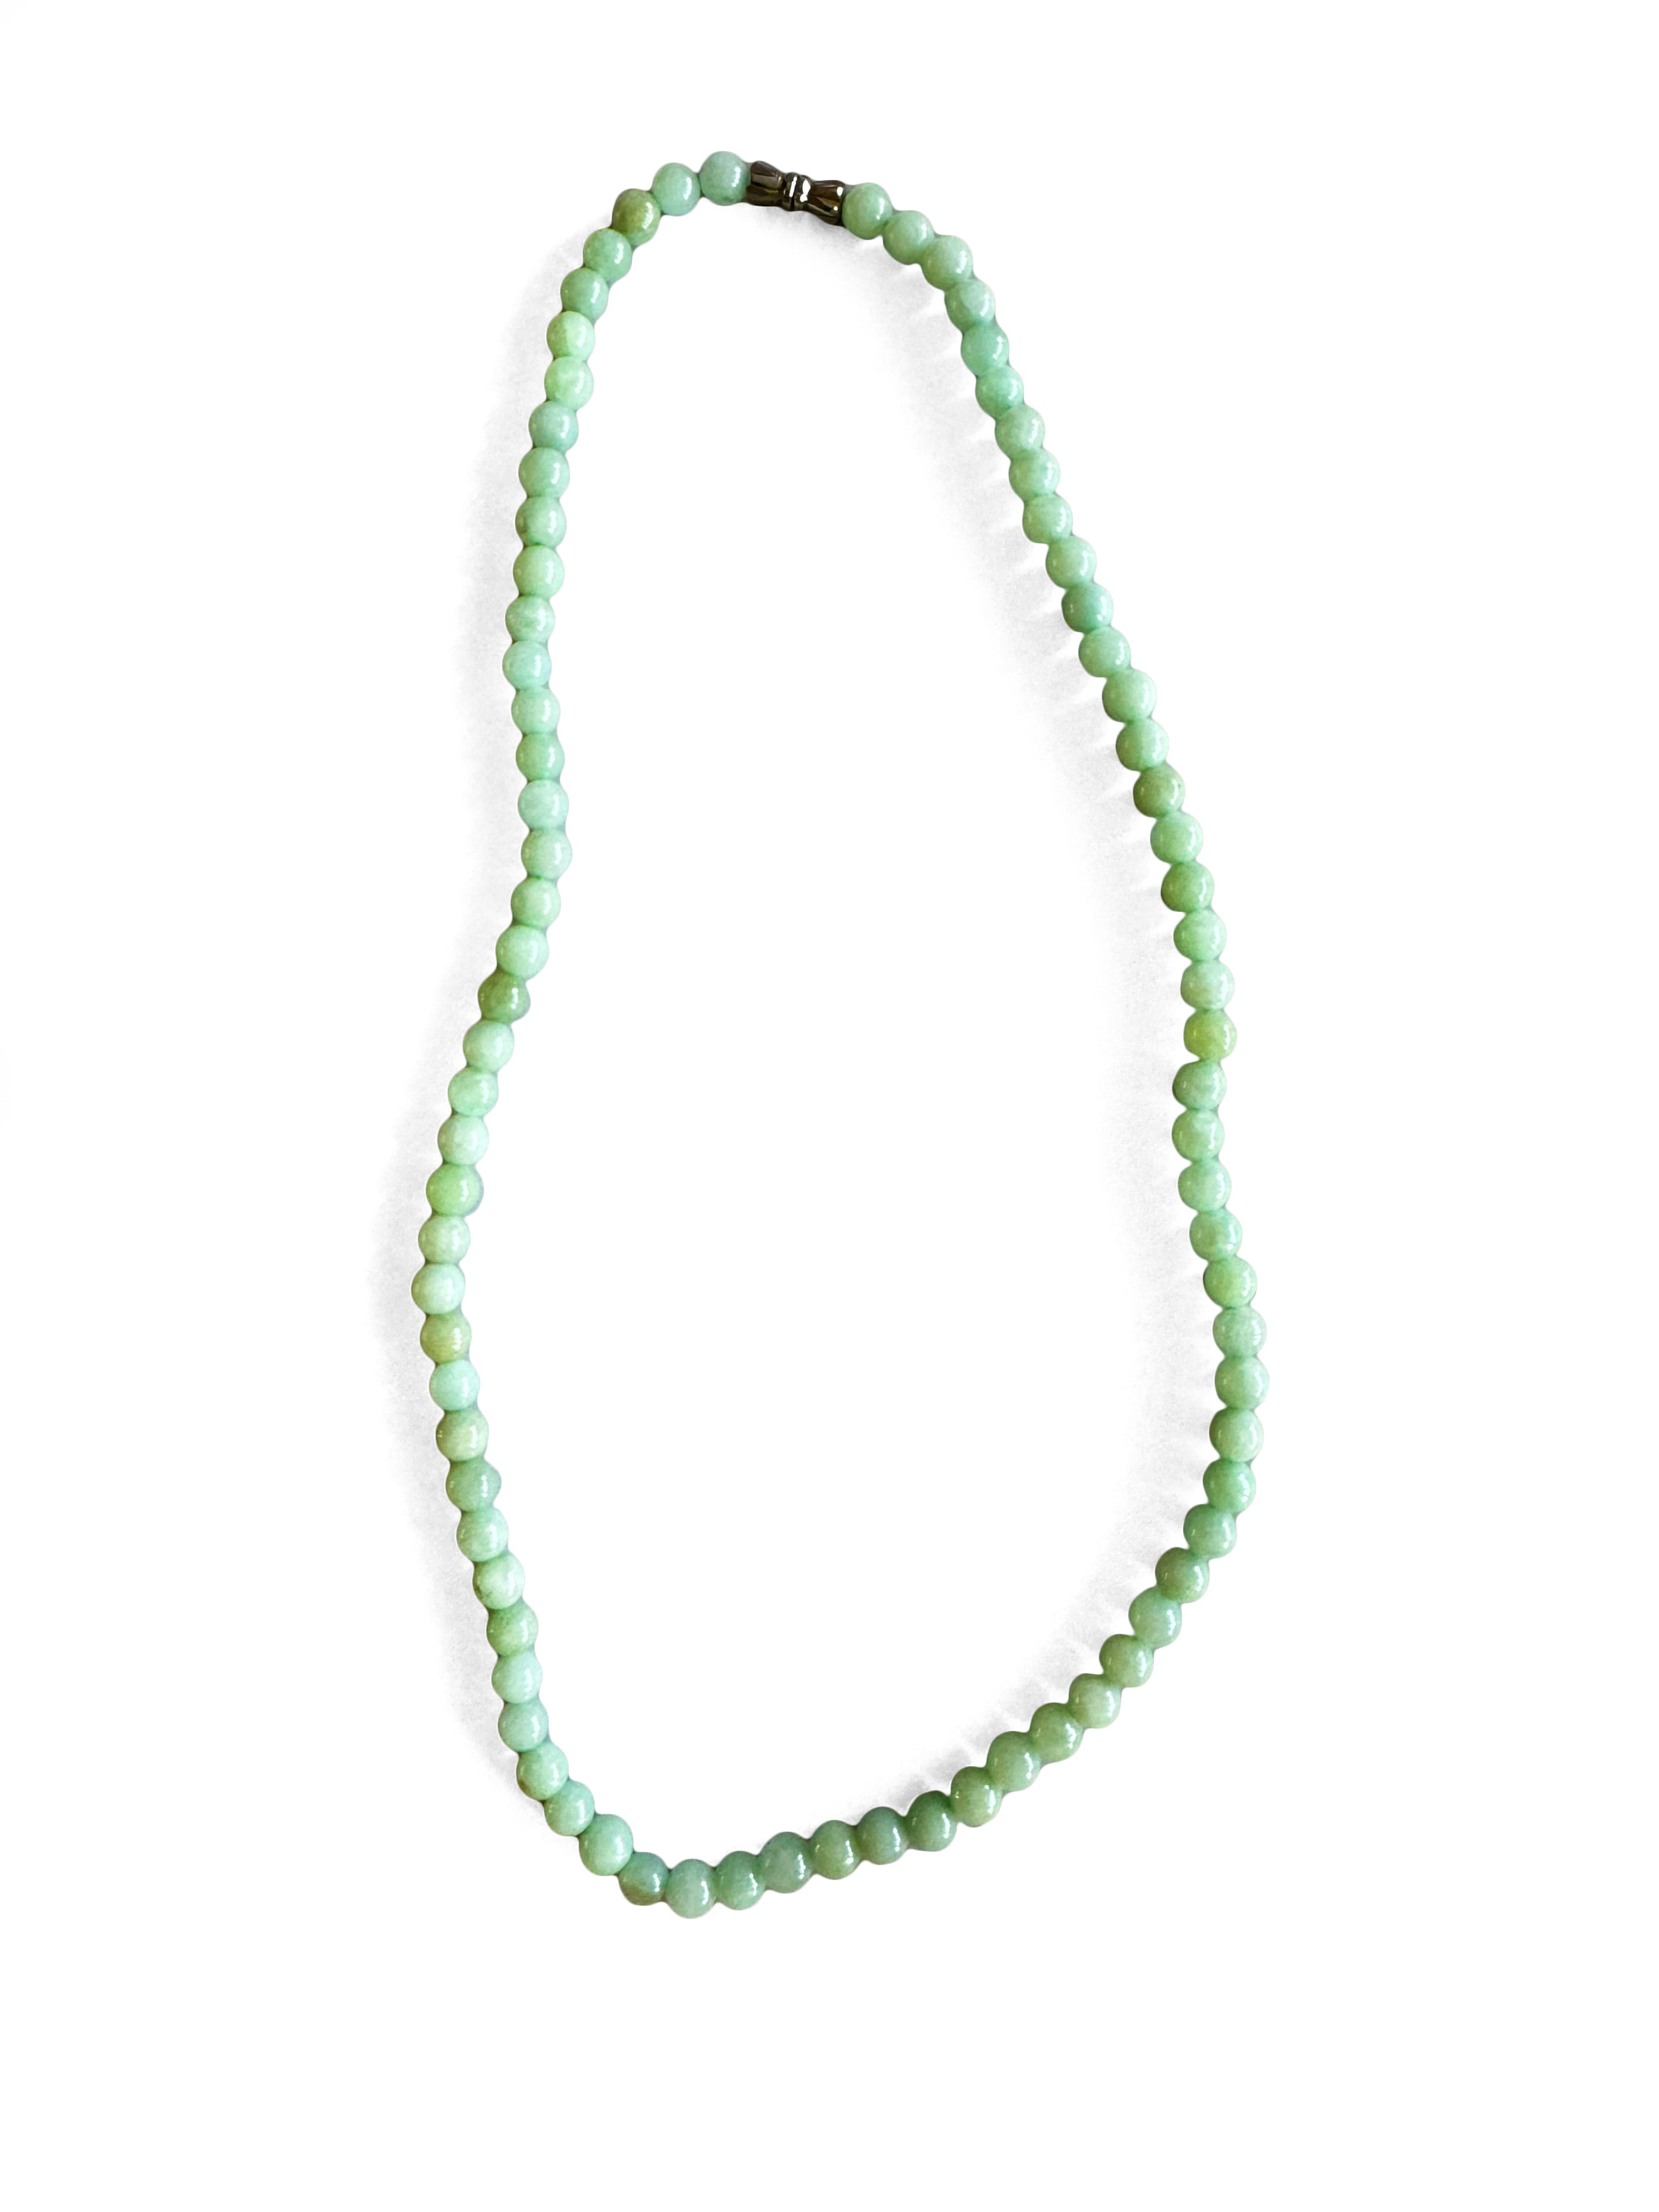 5mm Light Natural Jade Necklace